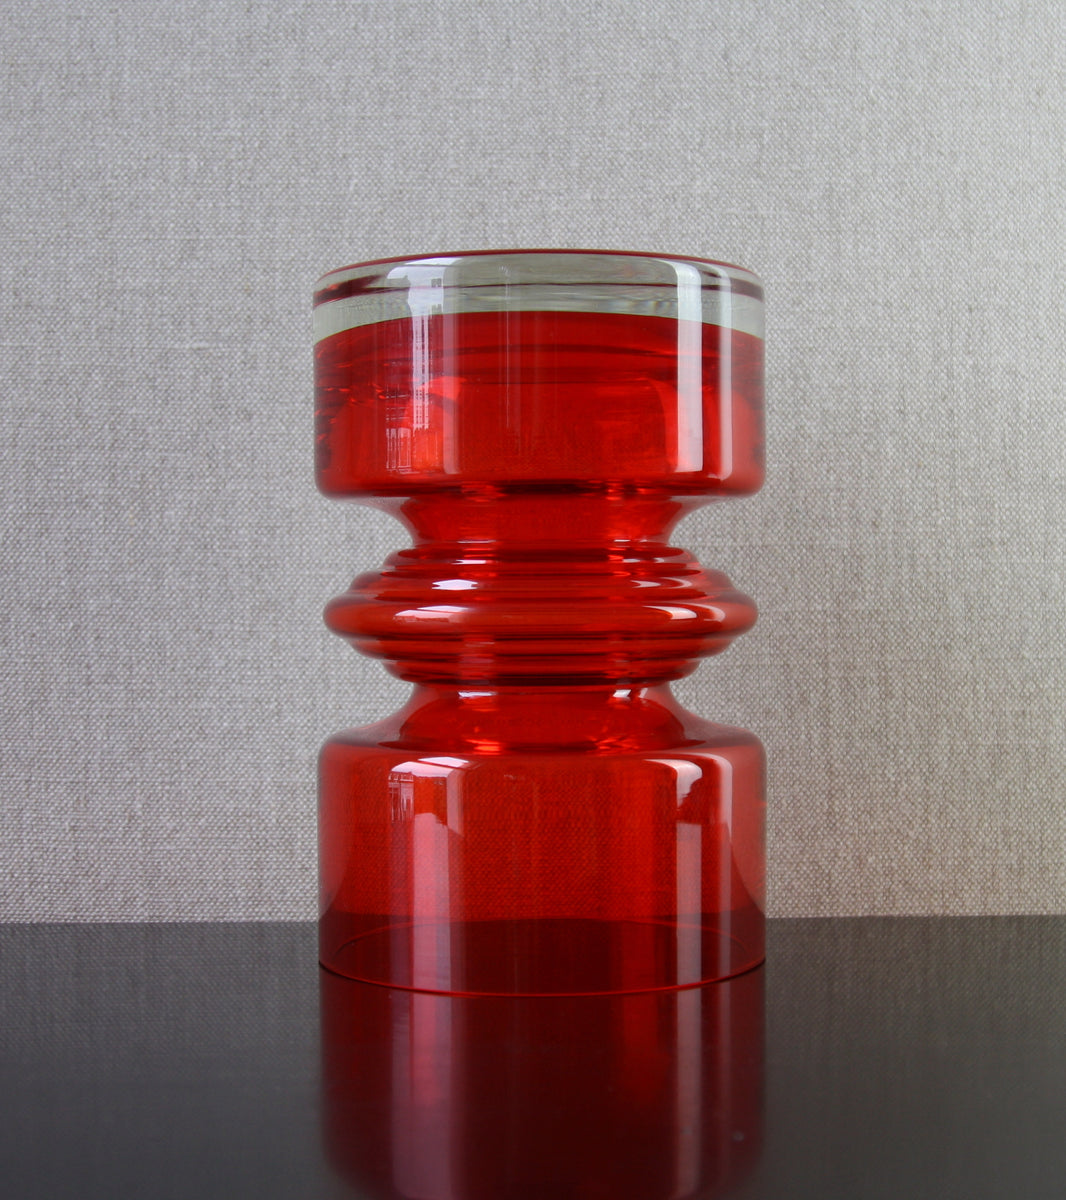 Ruby Red Model 1442 "Tiimalasi" (Hourglass) Vase / Nanny Still, 1970